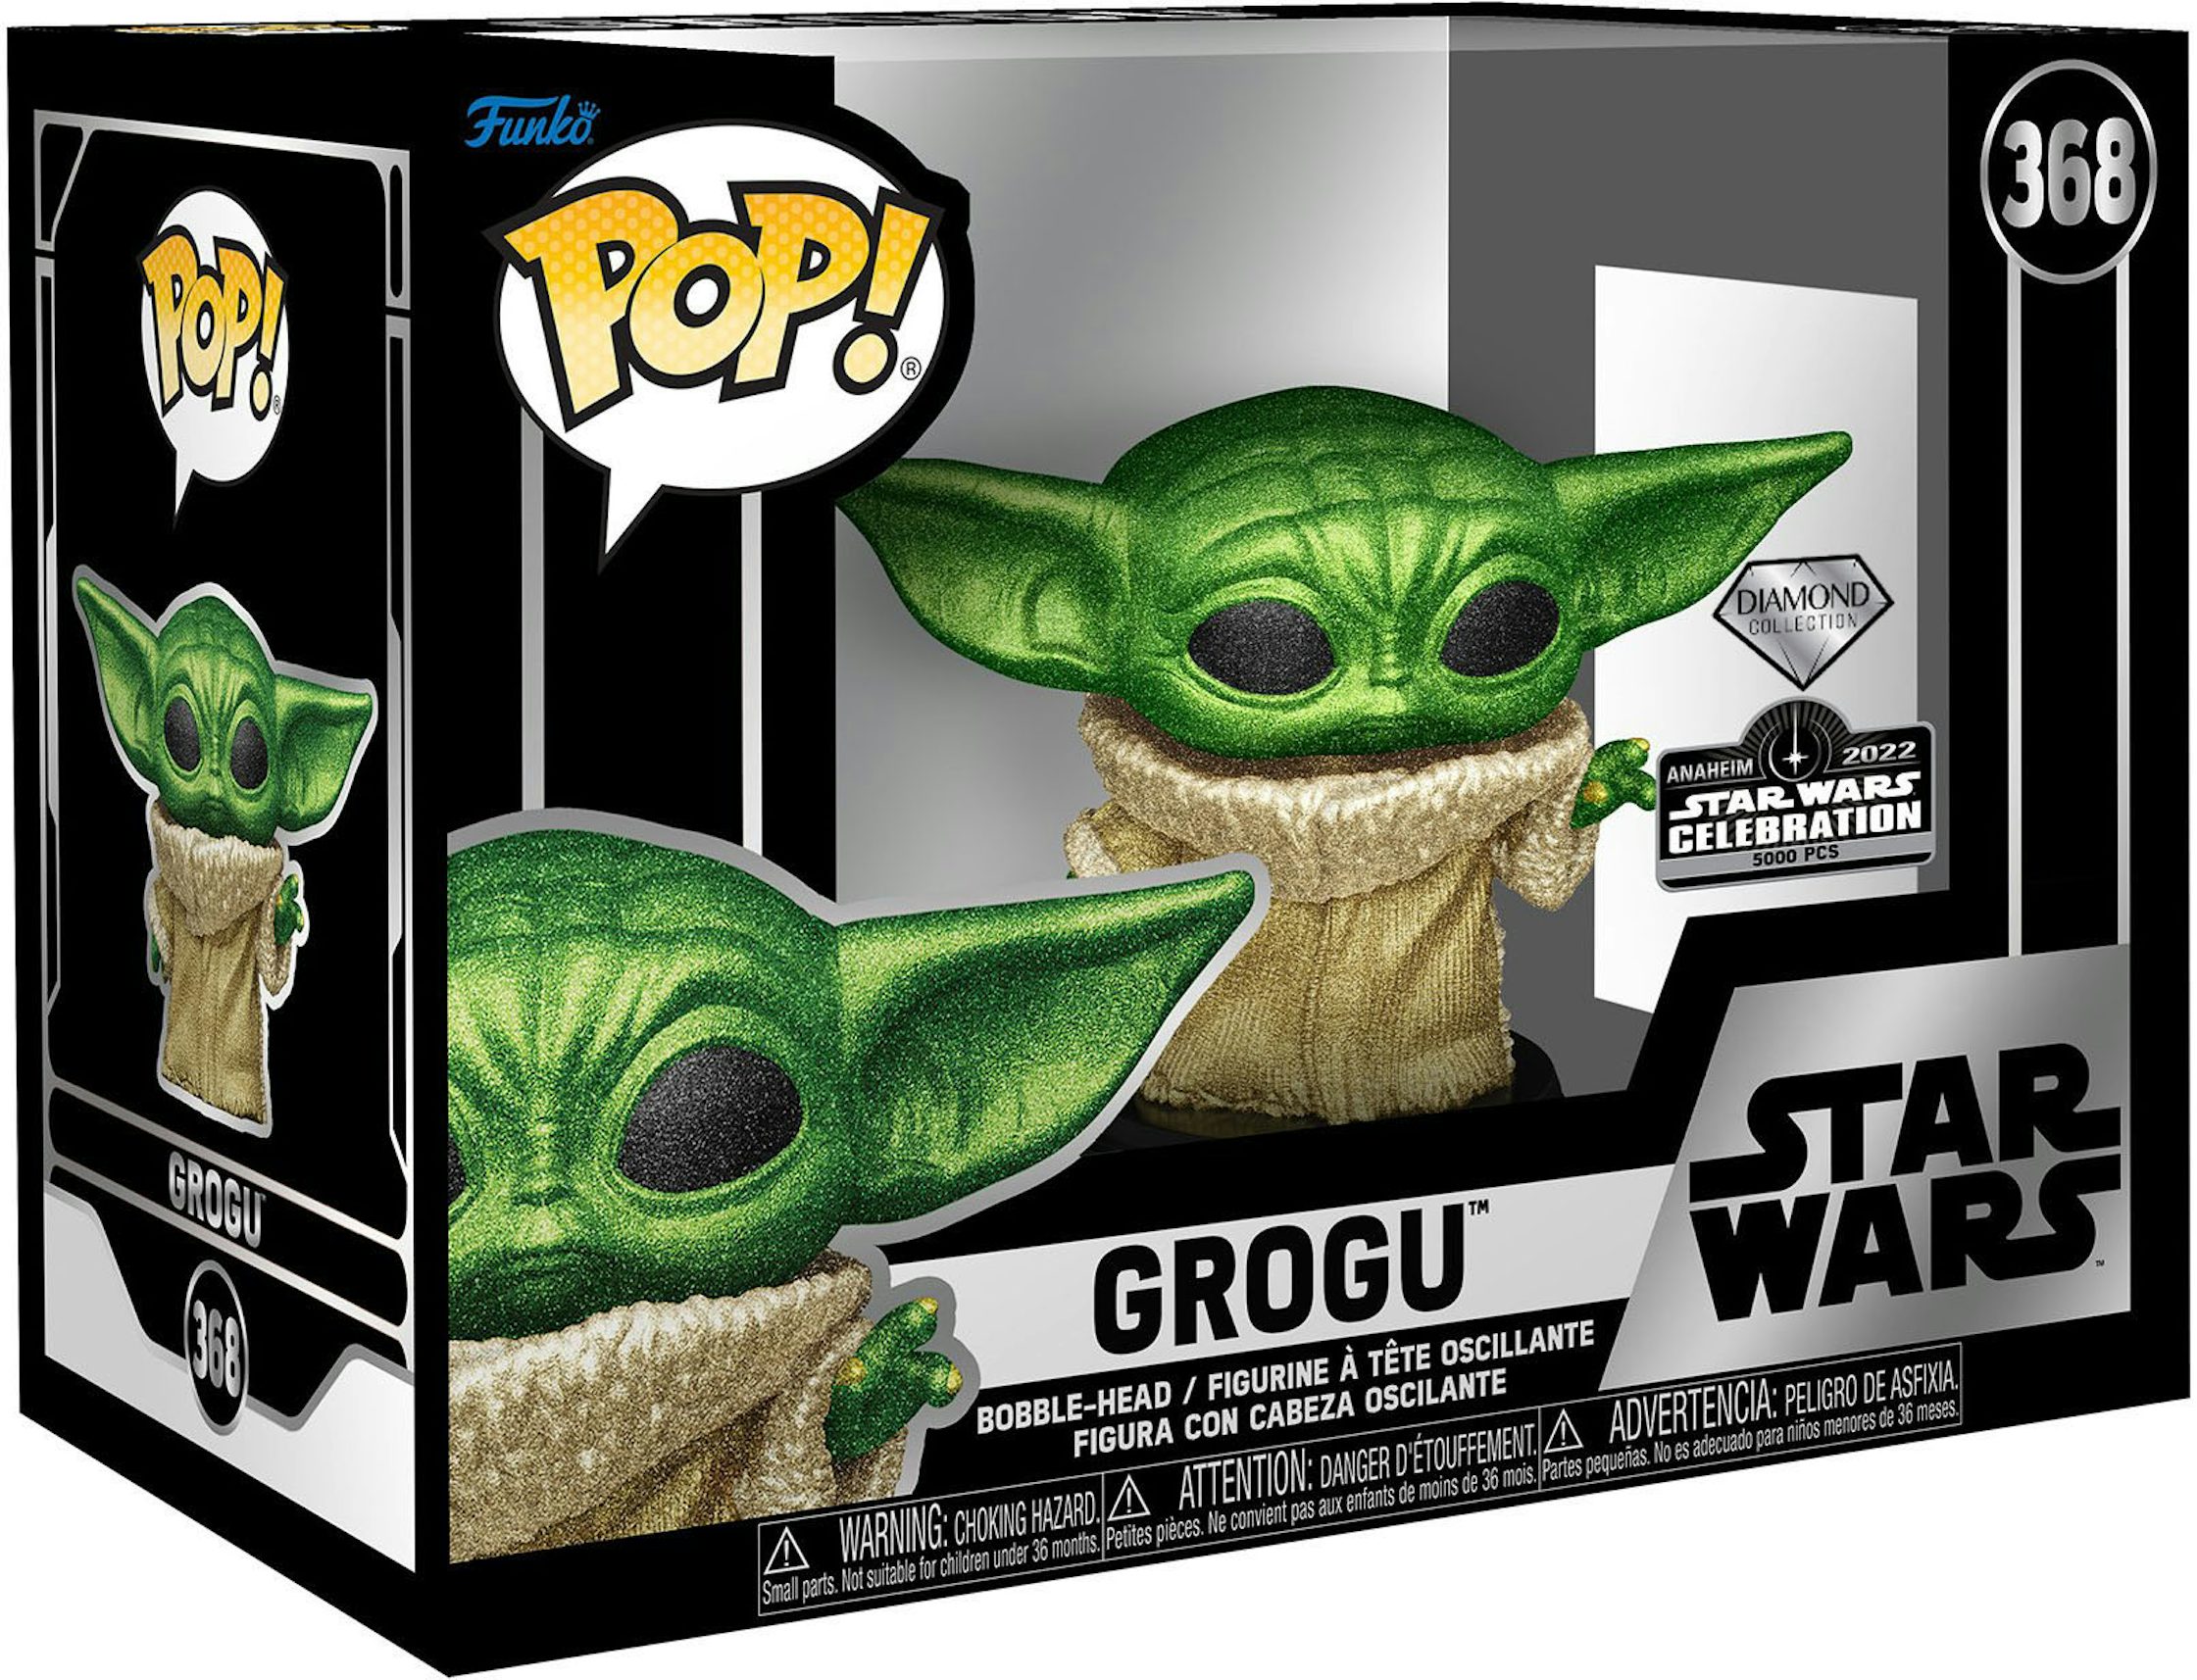 Funko Pop! Star Wars Grogu Diamond Collection 2022 Star Wars Celebration  Exclusive (Edition of 5000) Figure #368 - US